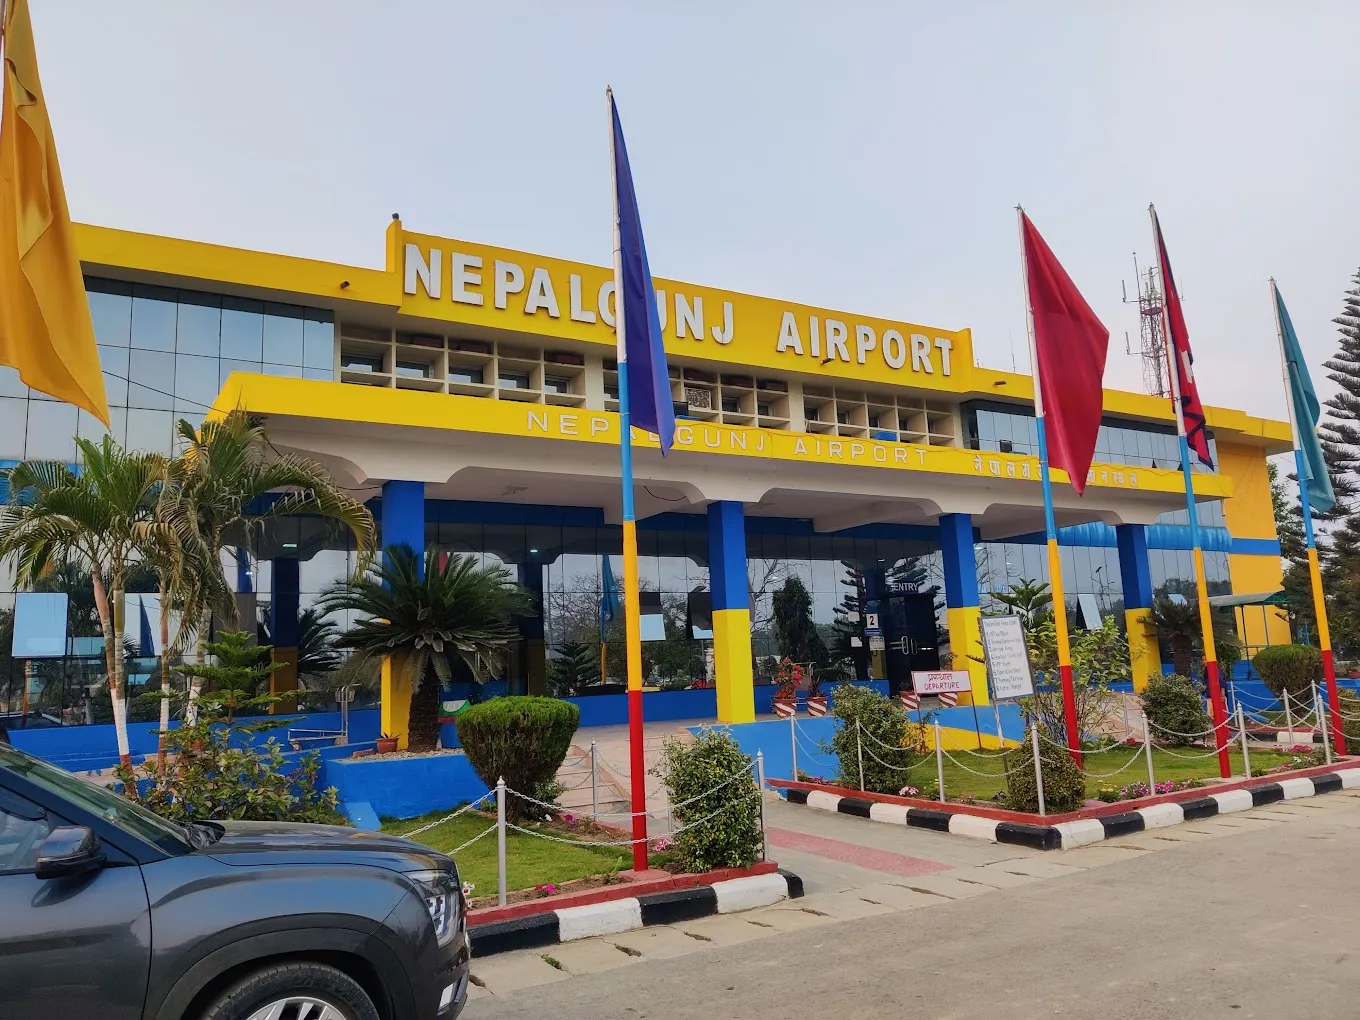 Nepalgunj Airport, near Ghorahi